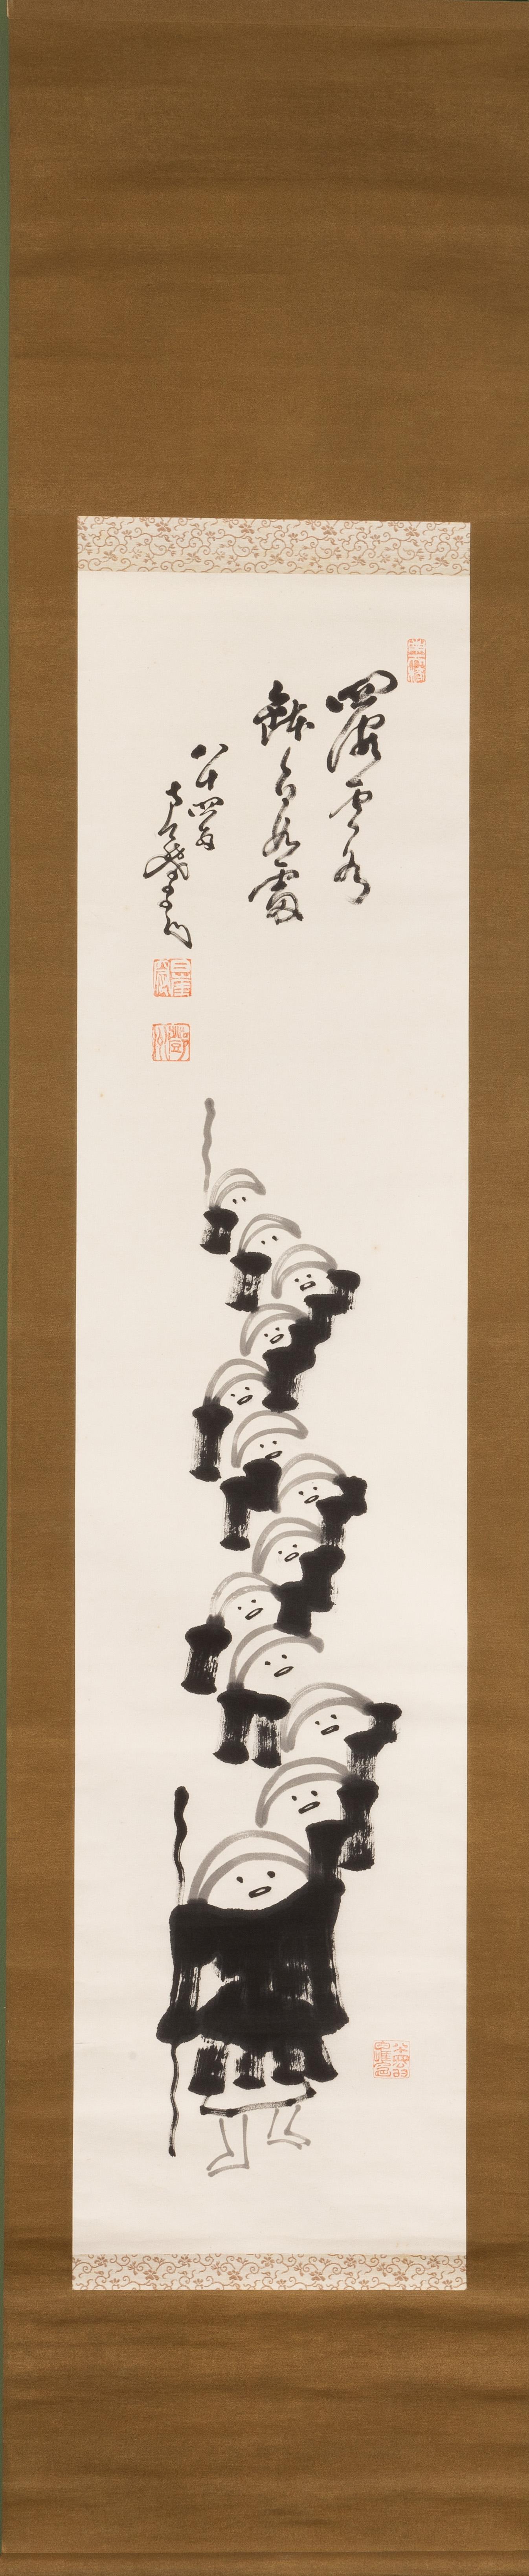 Nakahara Nantembō, Monk Processions 5